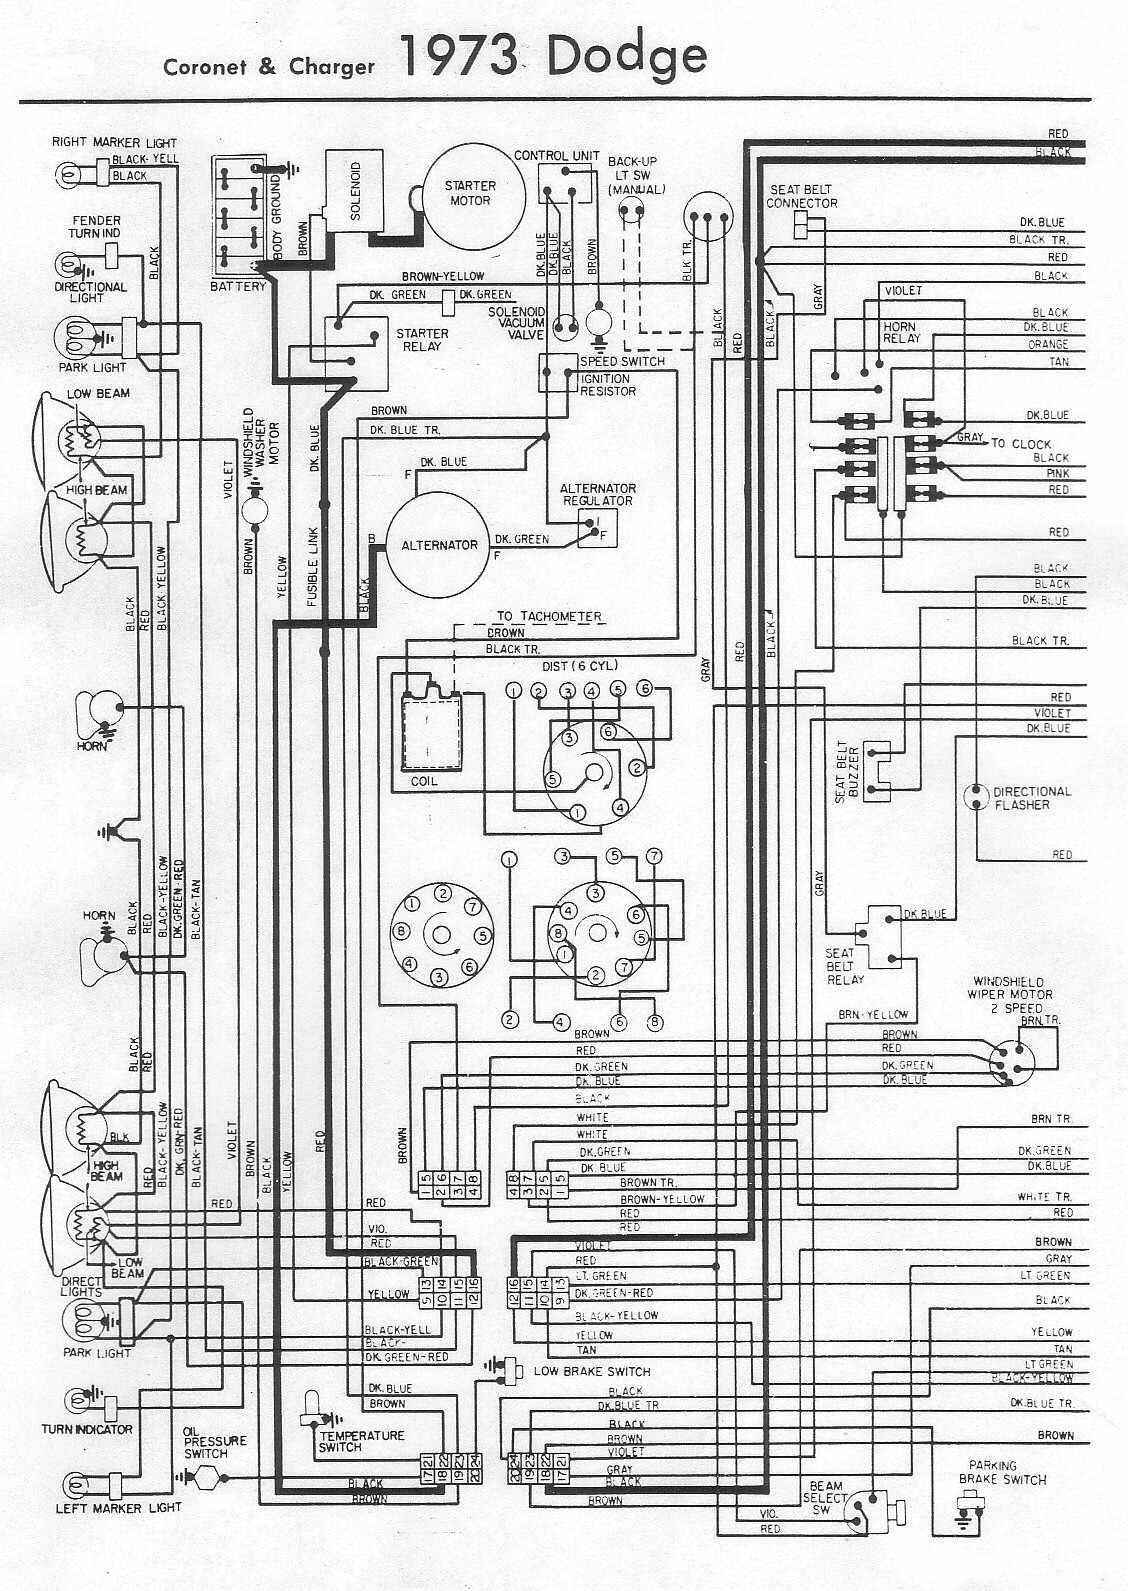 DODGE - Car PDF Manual, Wiring Diagram & Fault Codes DTC  73 Challenger Engine Wiring Diagram    automotive-manuals.net